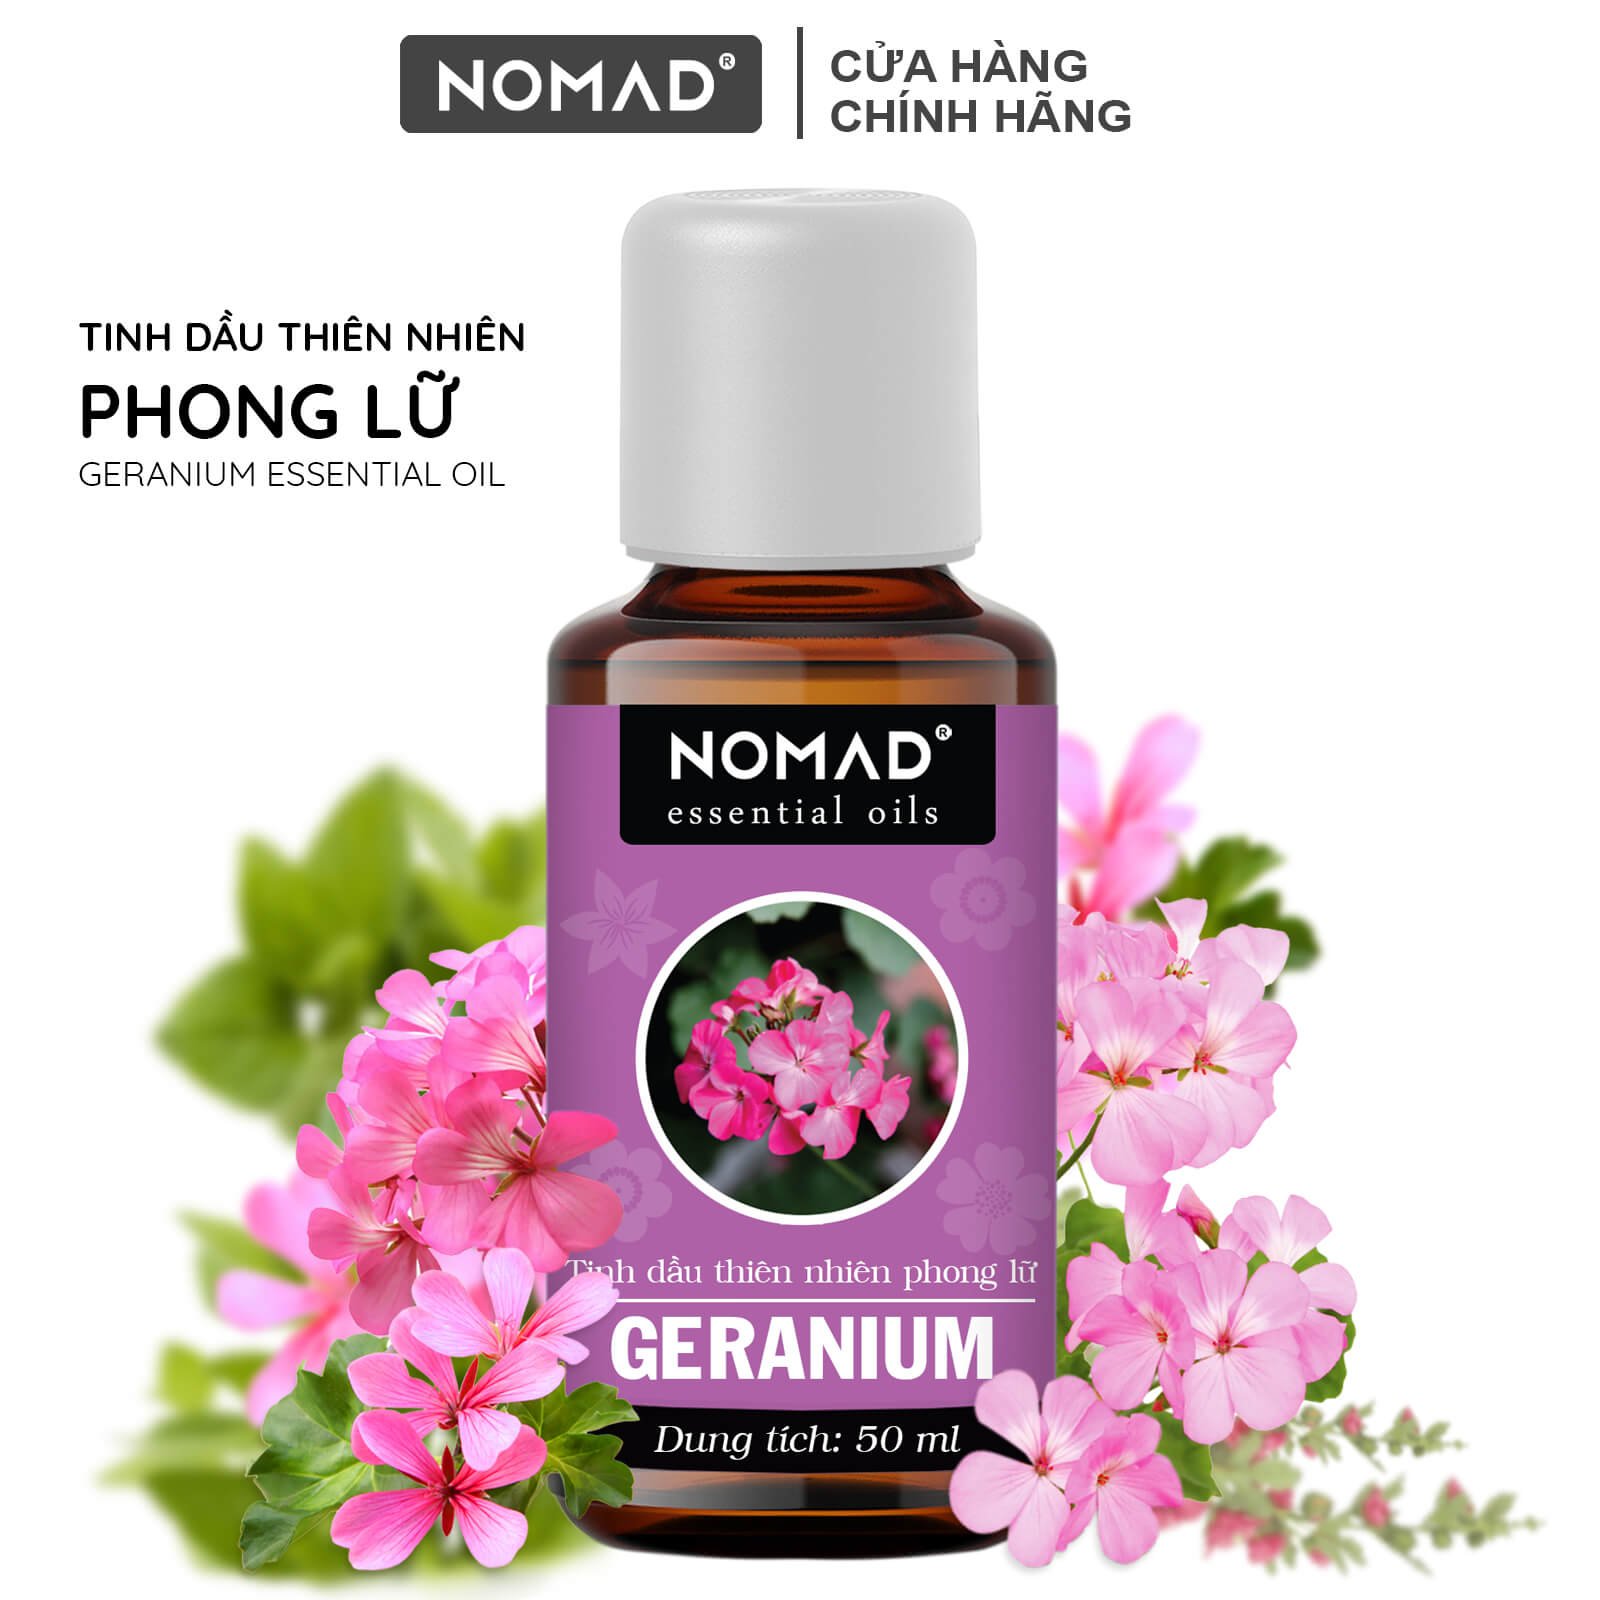 tinh-dau-thien-nhien-huong-phong-lu-nomad-essential-oils-geranium-xong-thom-phong-khu-mui-thanh-loc-khong-khi